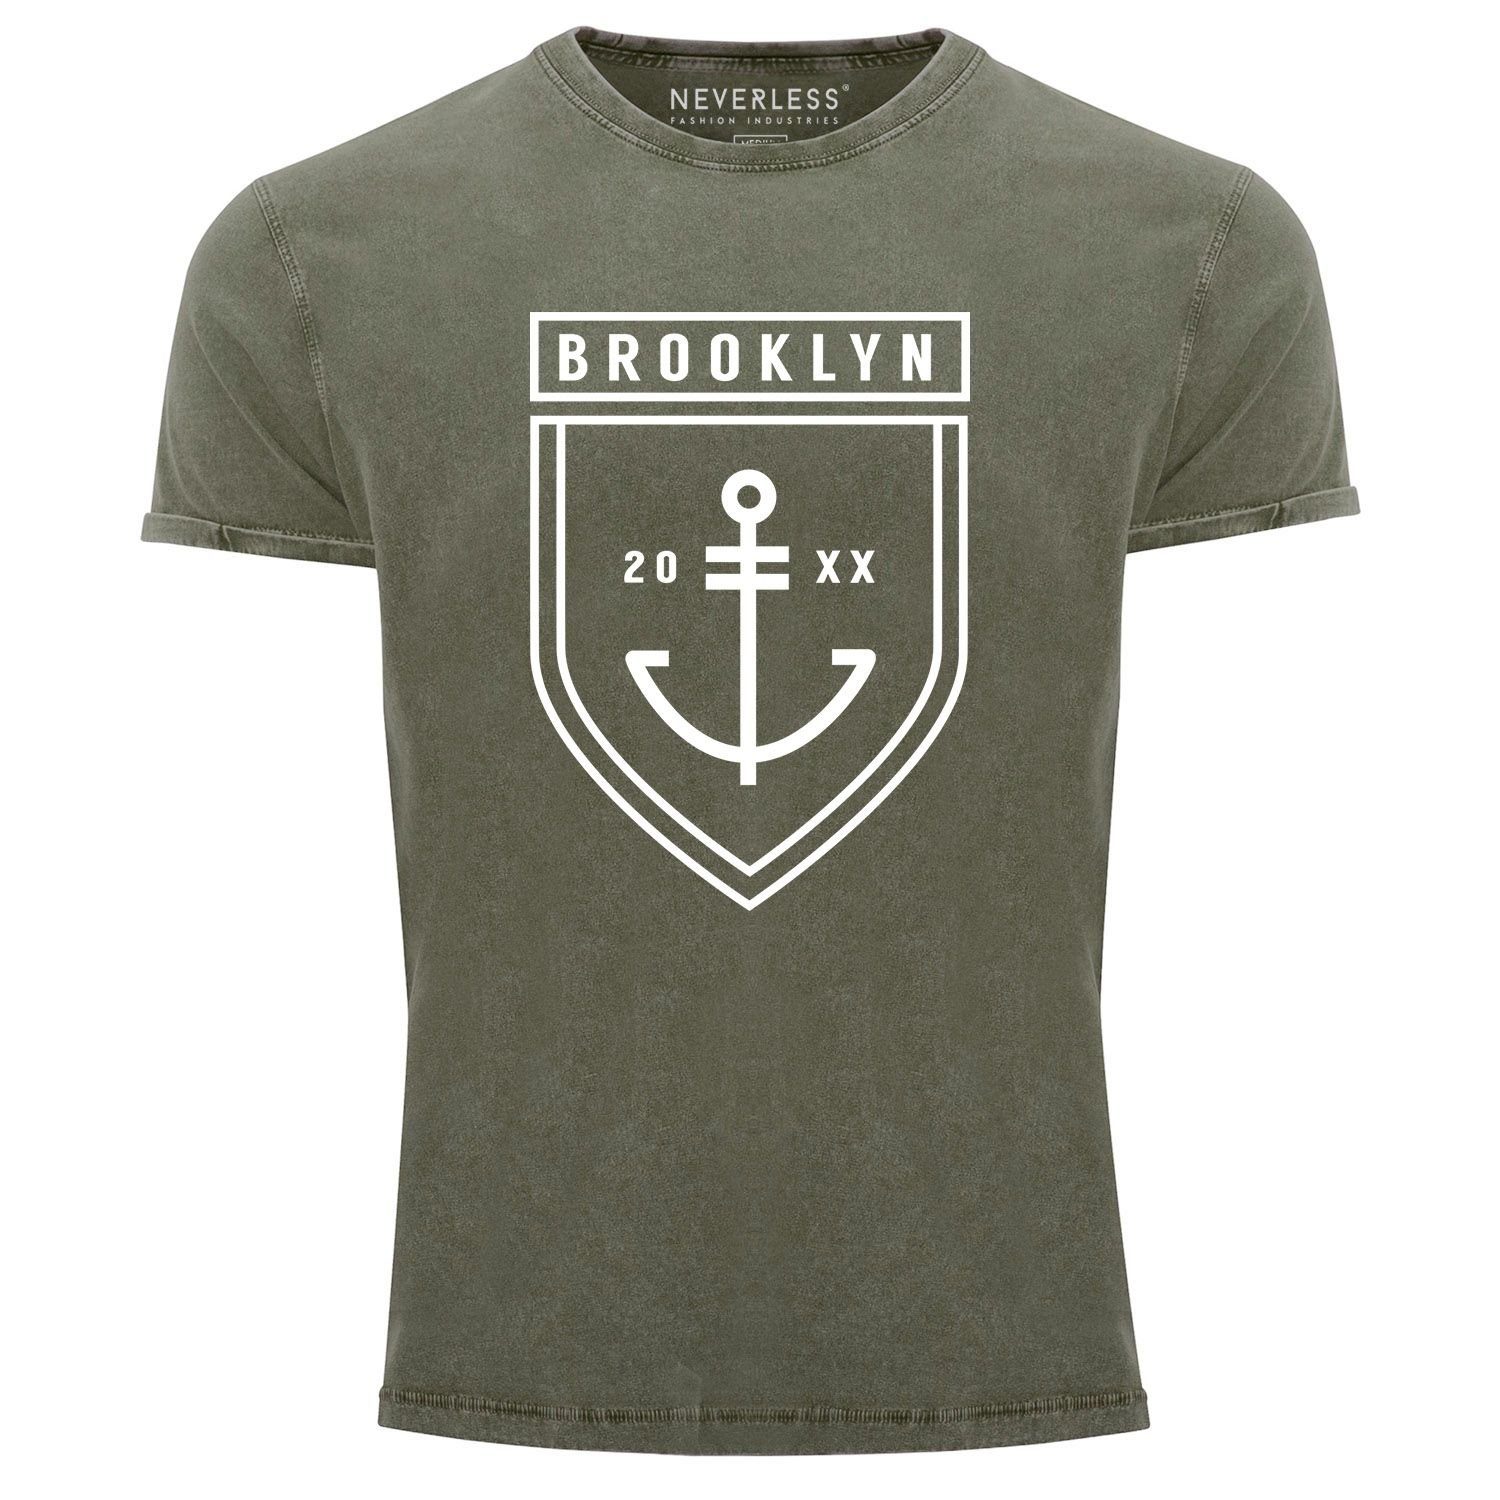 Neverless Cooles Angesagtes T-Shirt oliv Used Fit Vintage Brooklyn Shirt Anker mit Slim Neverless® Look Print-Shirt Aufdruck Print Herren